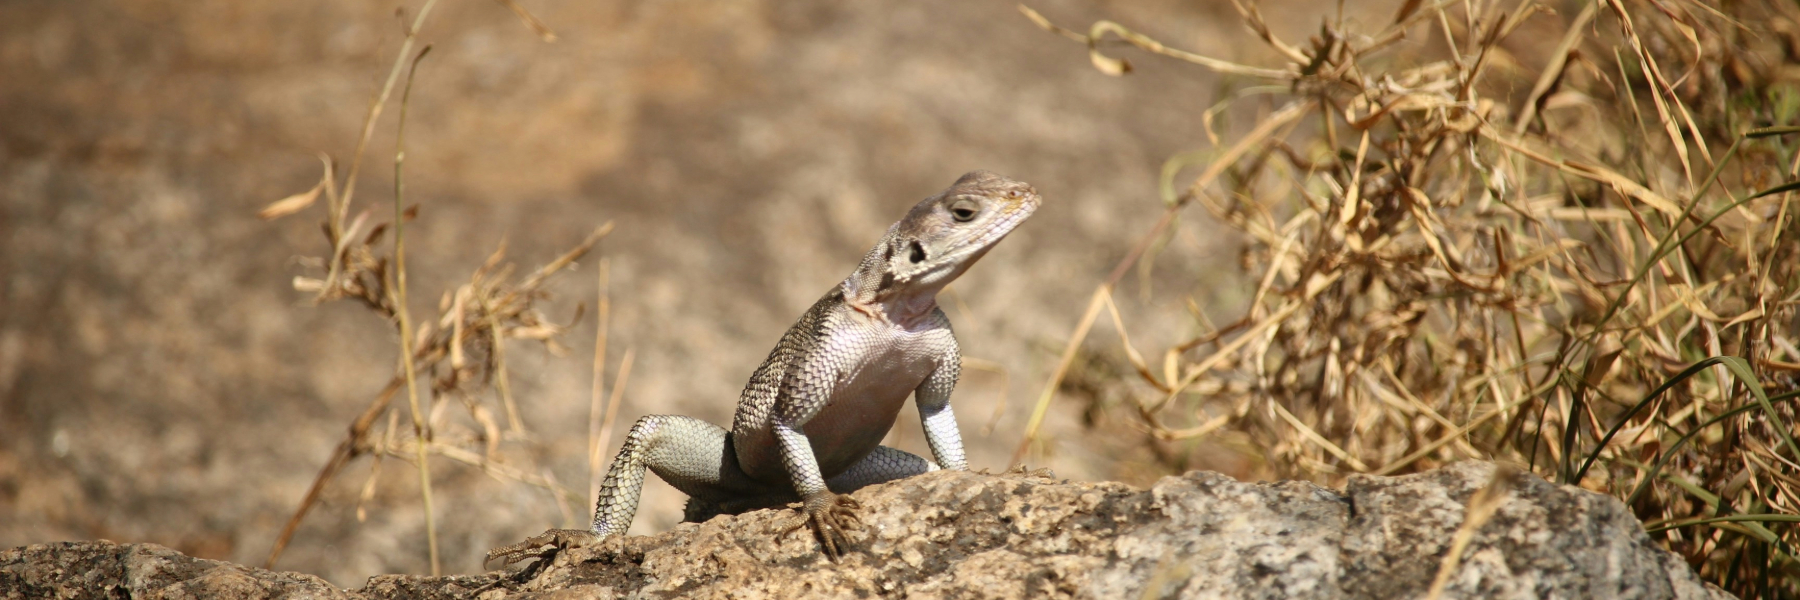 Lizard beside a shrub in the desert